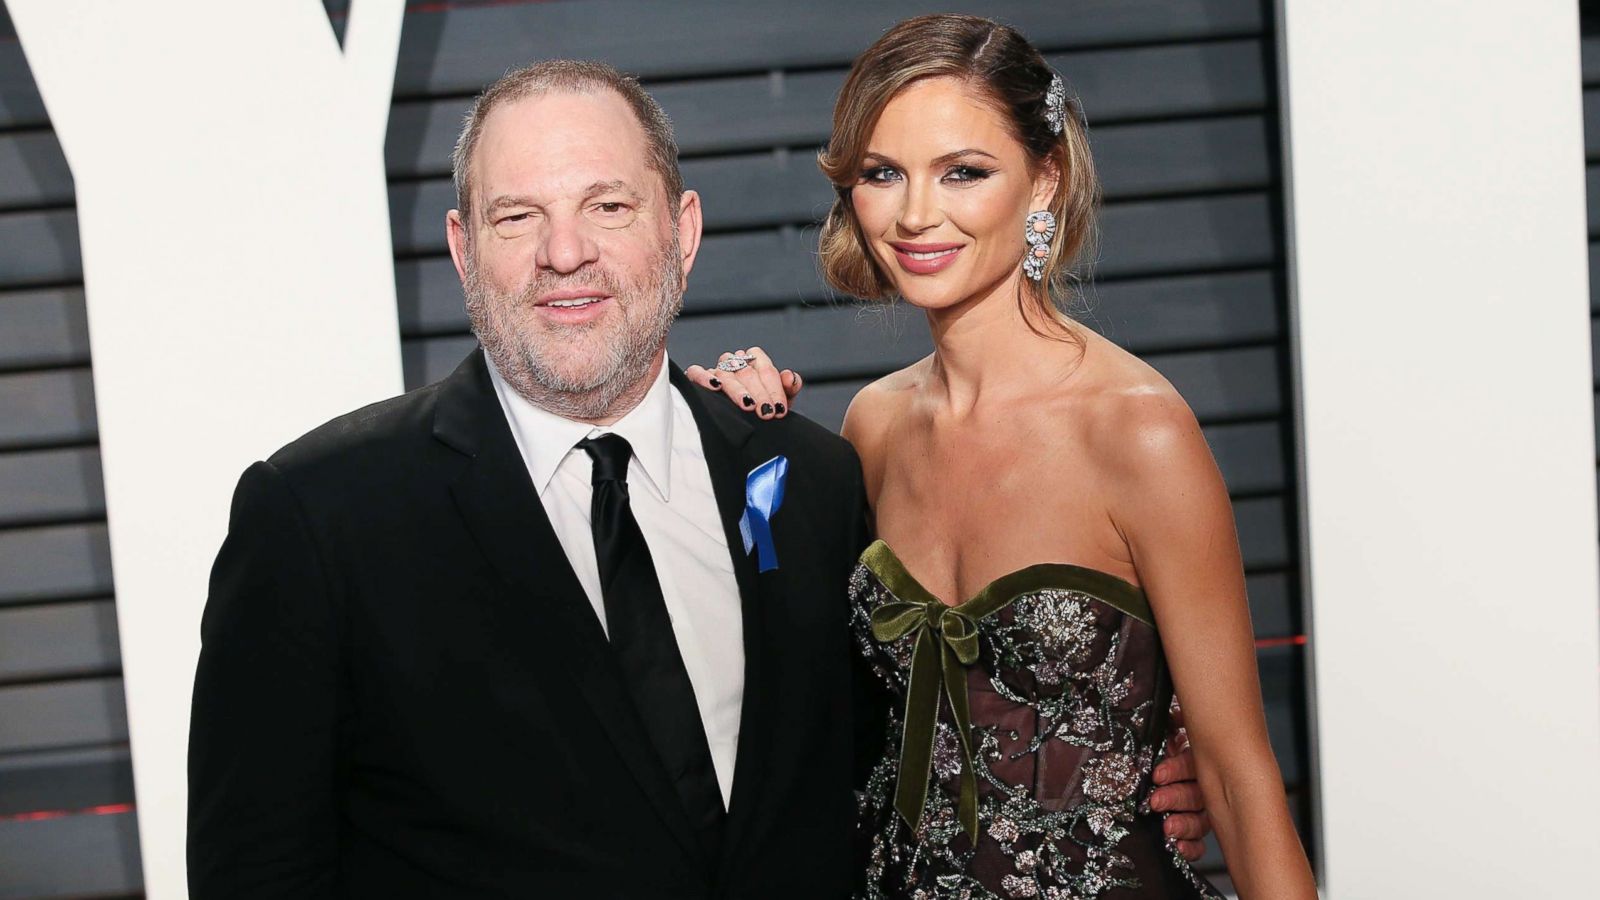 Harvey Weinstein S Estranged Wife Georgina Chapman Moves Forward With Fashion Line Amid Scandal Abc News